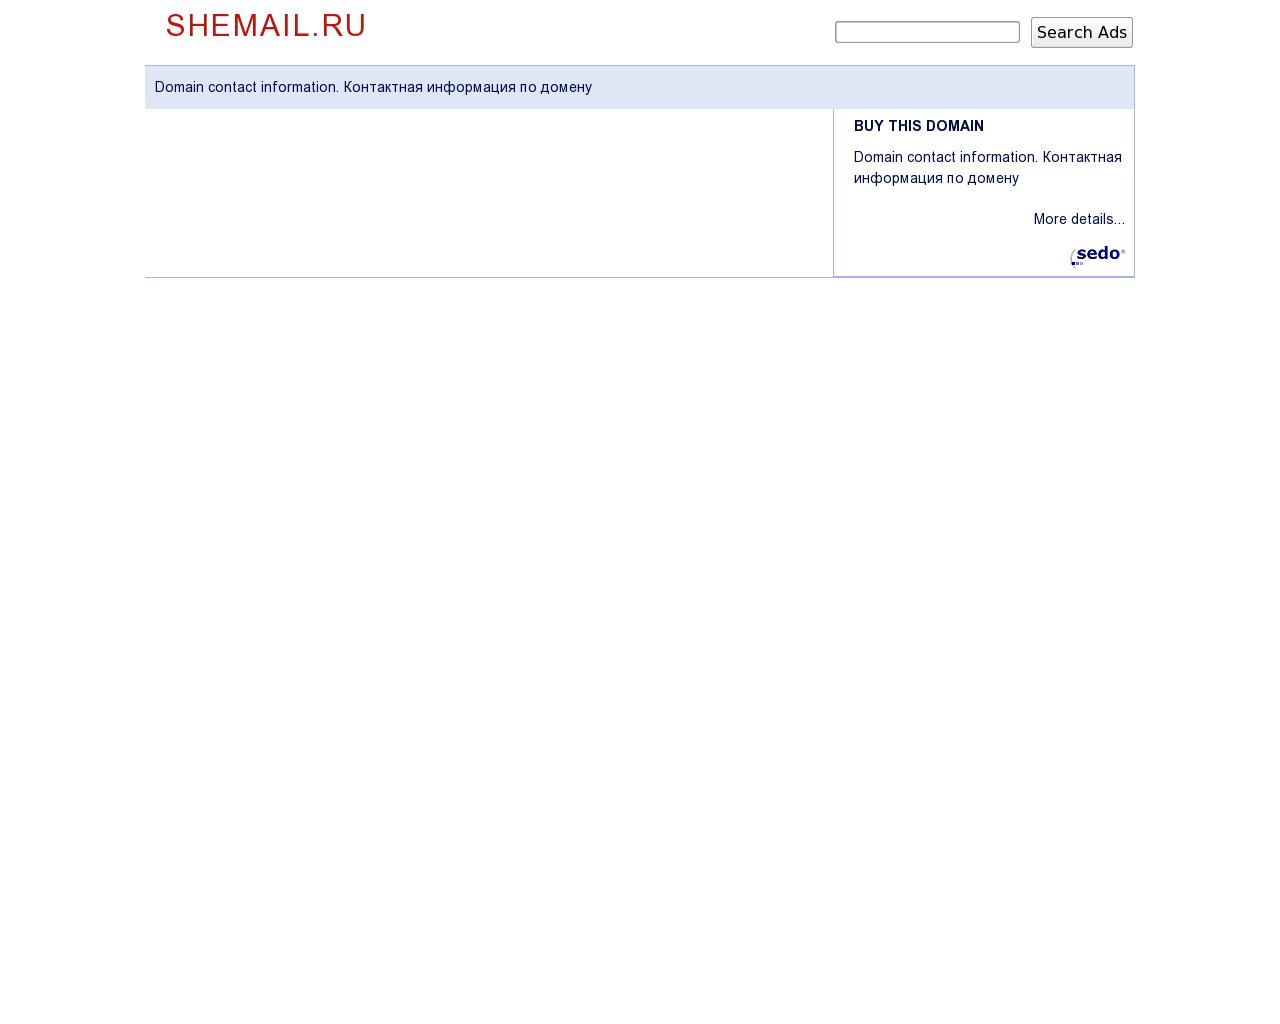 Изображение сайта shemail.ru в разрешении 1280x1024